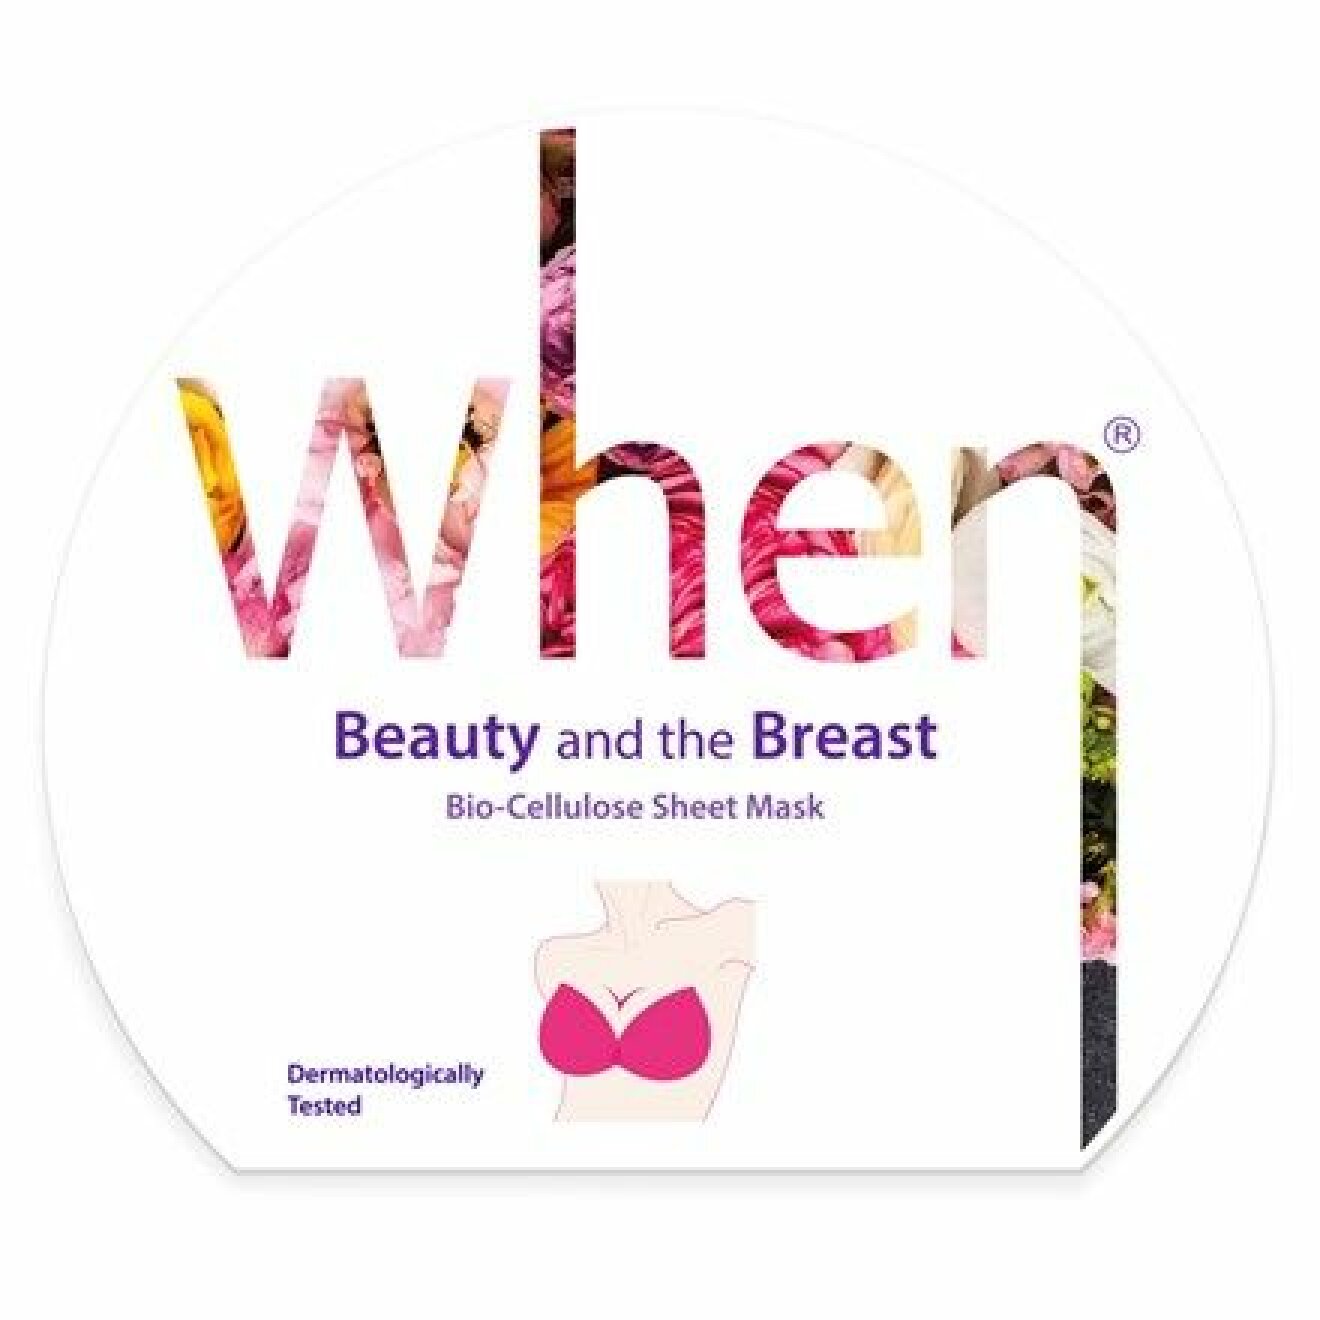 Beauty and the breast bio-cellulose sheet mask från märket When.